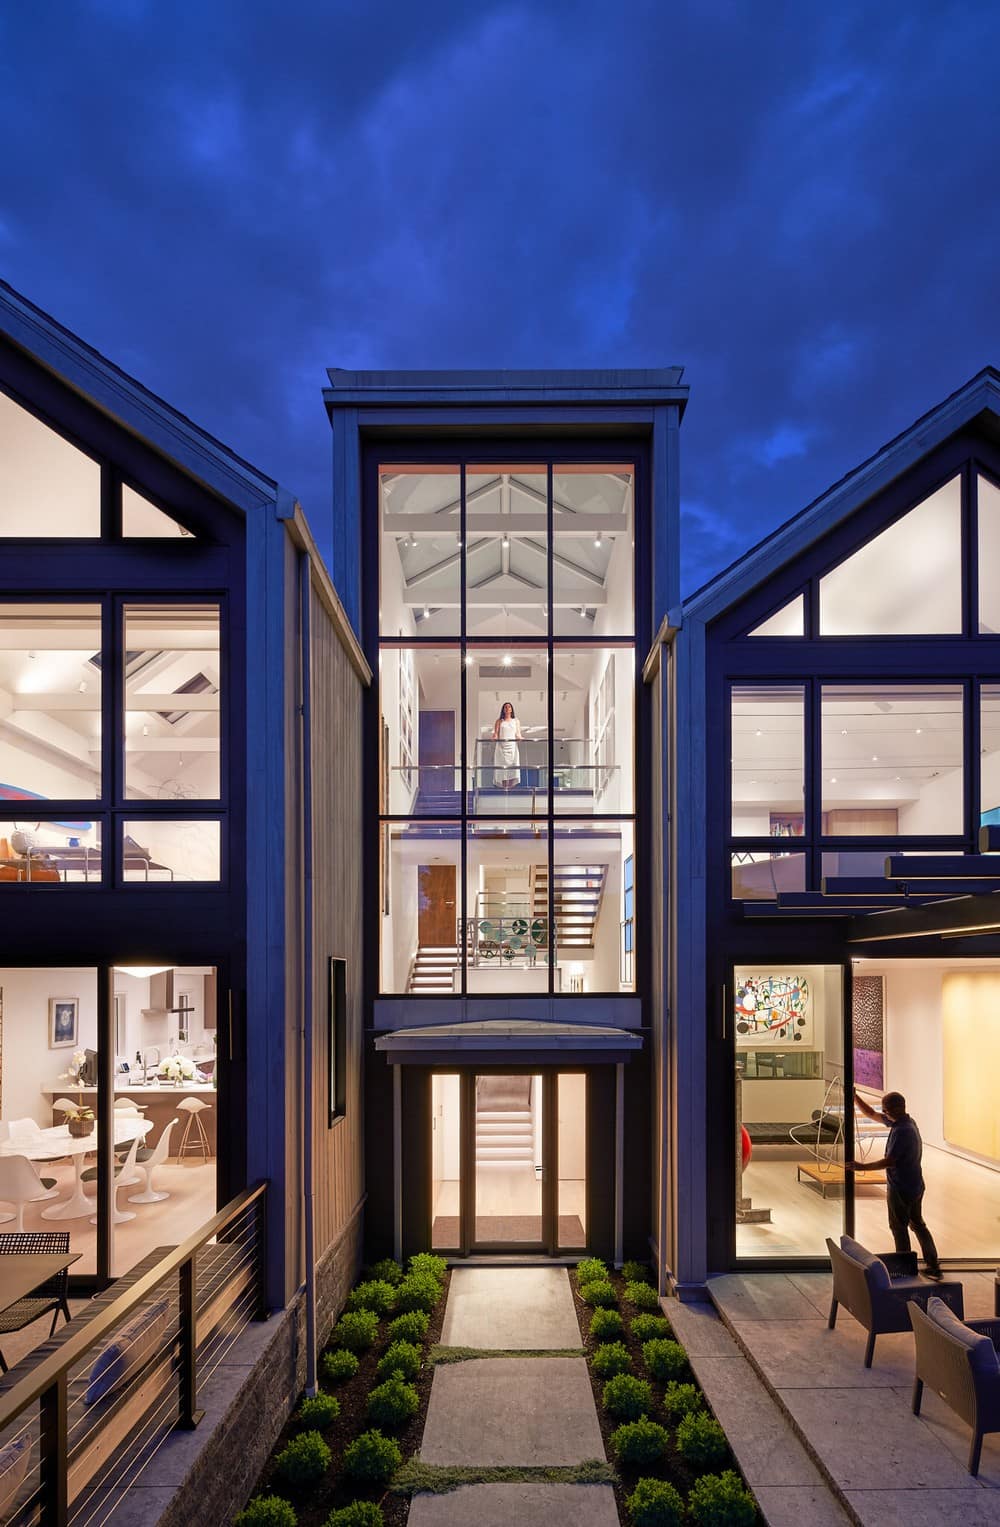 Gallery House / John Wingfelder Architect